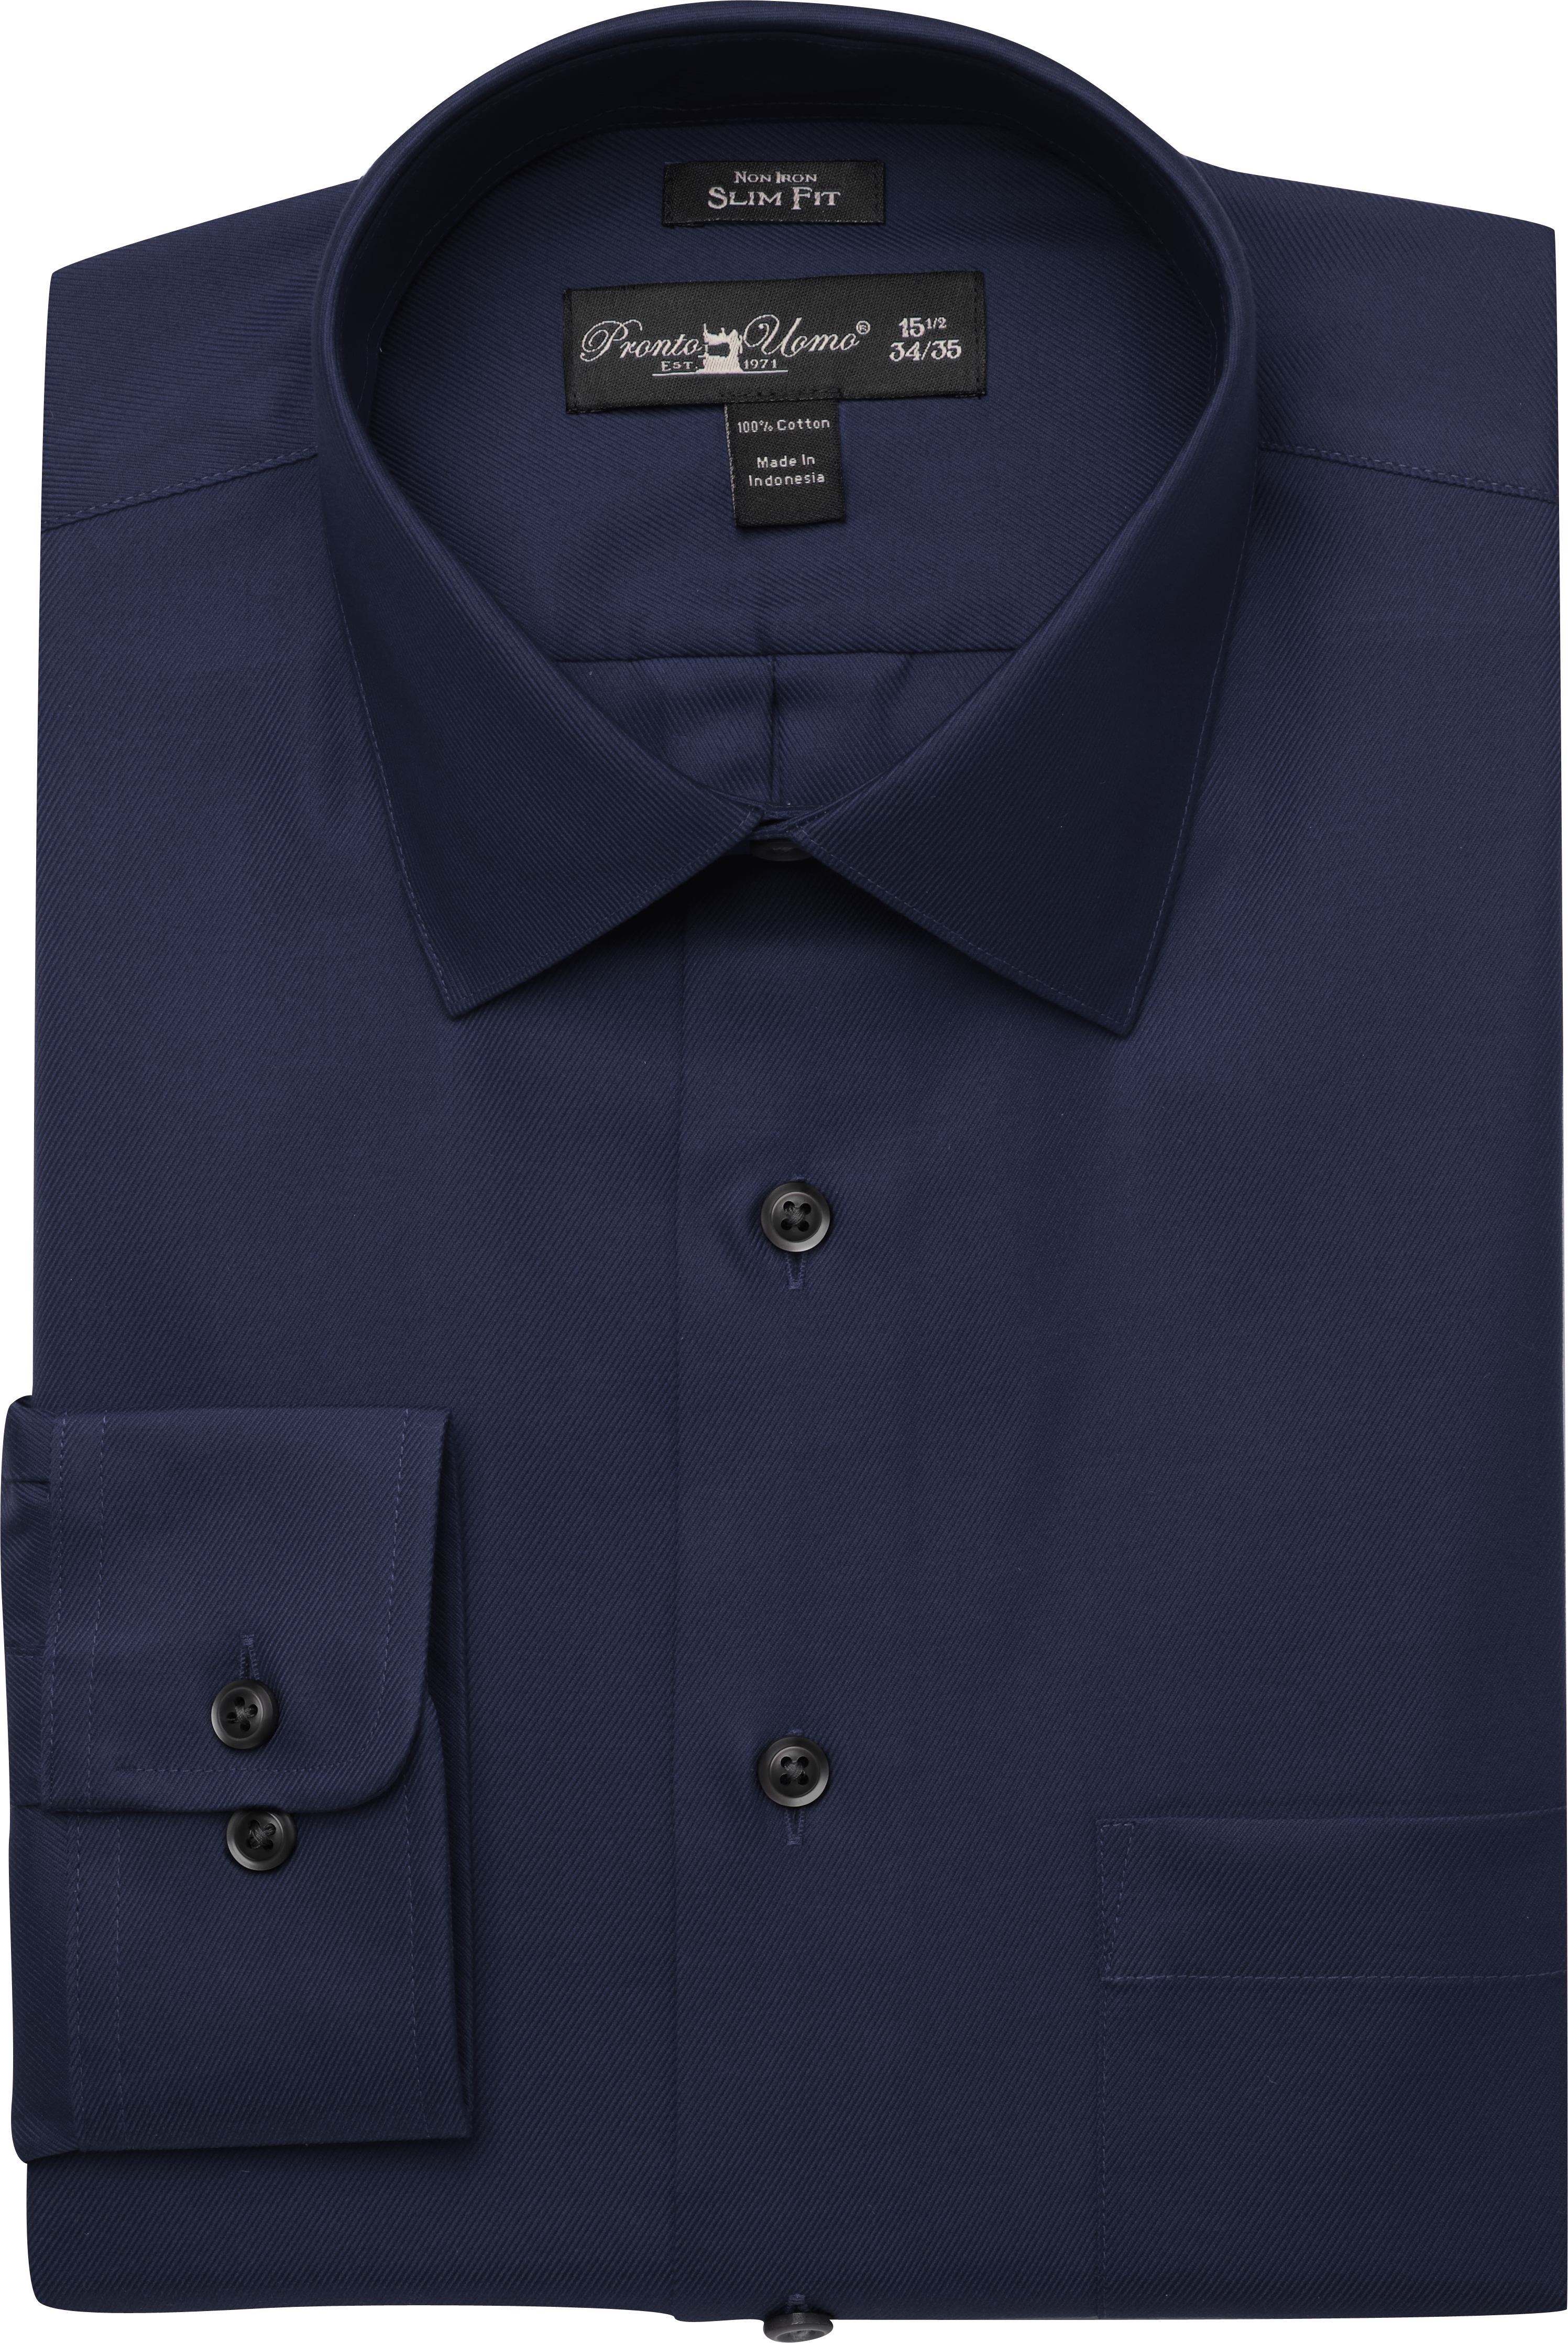 Pronto Uomo Navy Twill Slim Fit Dress Shirt - Men's Shirts | Men's ...